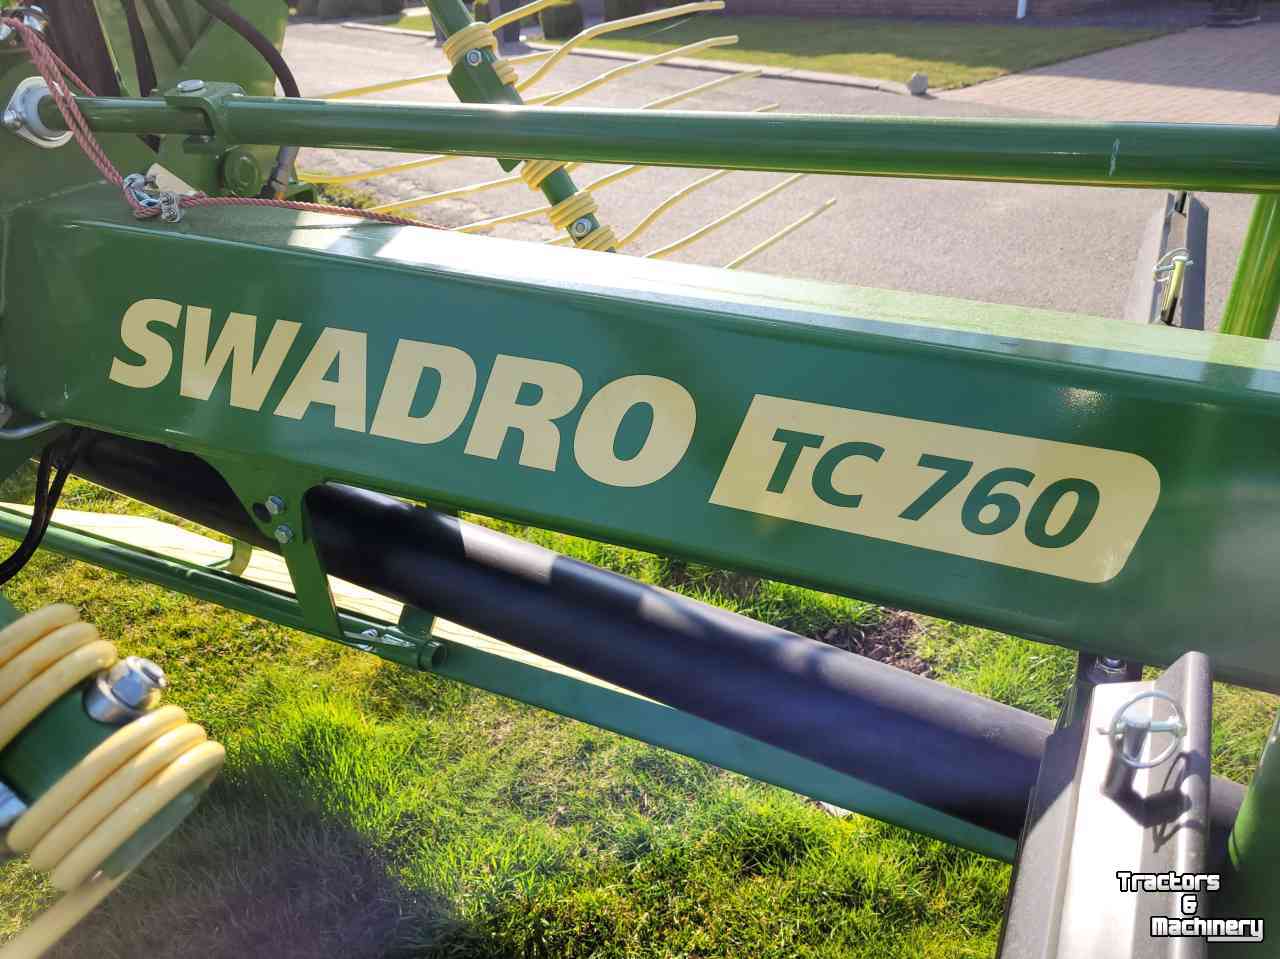 Schwader Krone Swadro TC 760